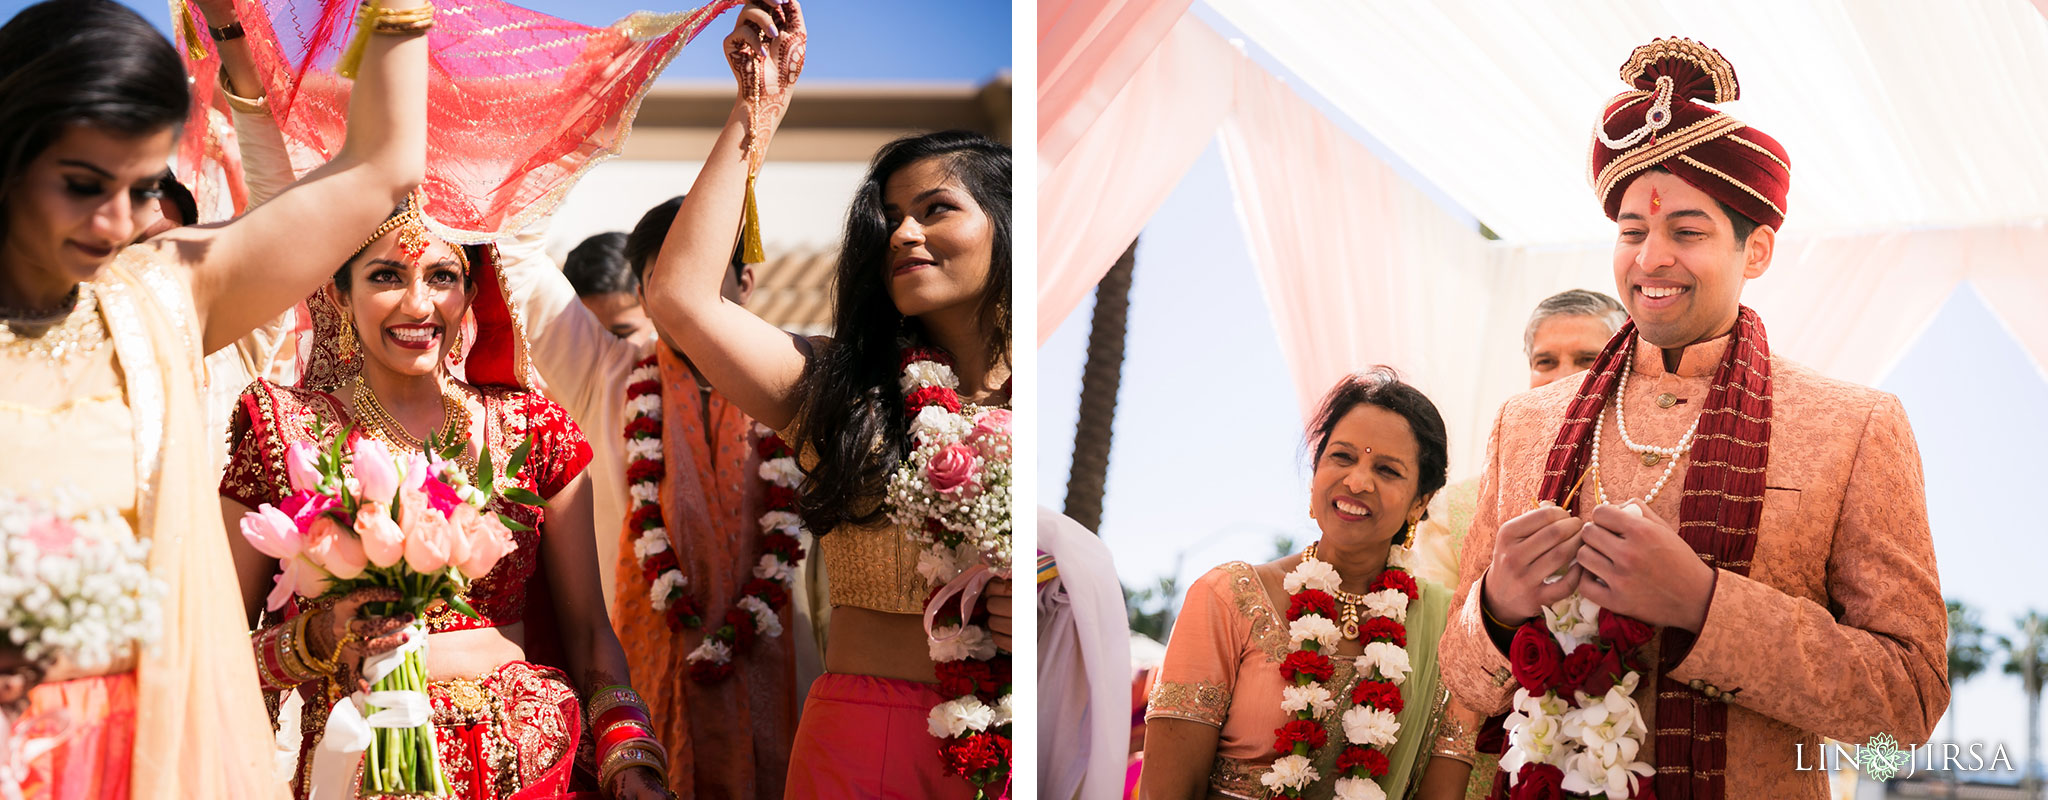 27 hilton waterfront huntington beach indian wedding ceremony photography